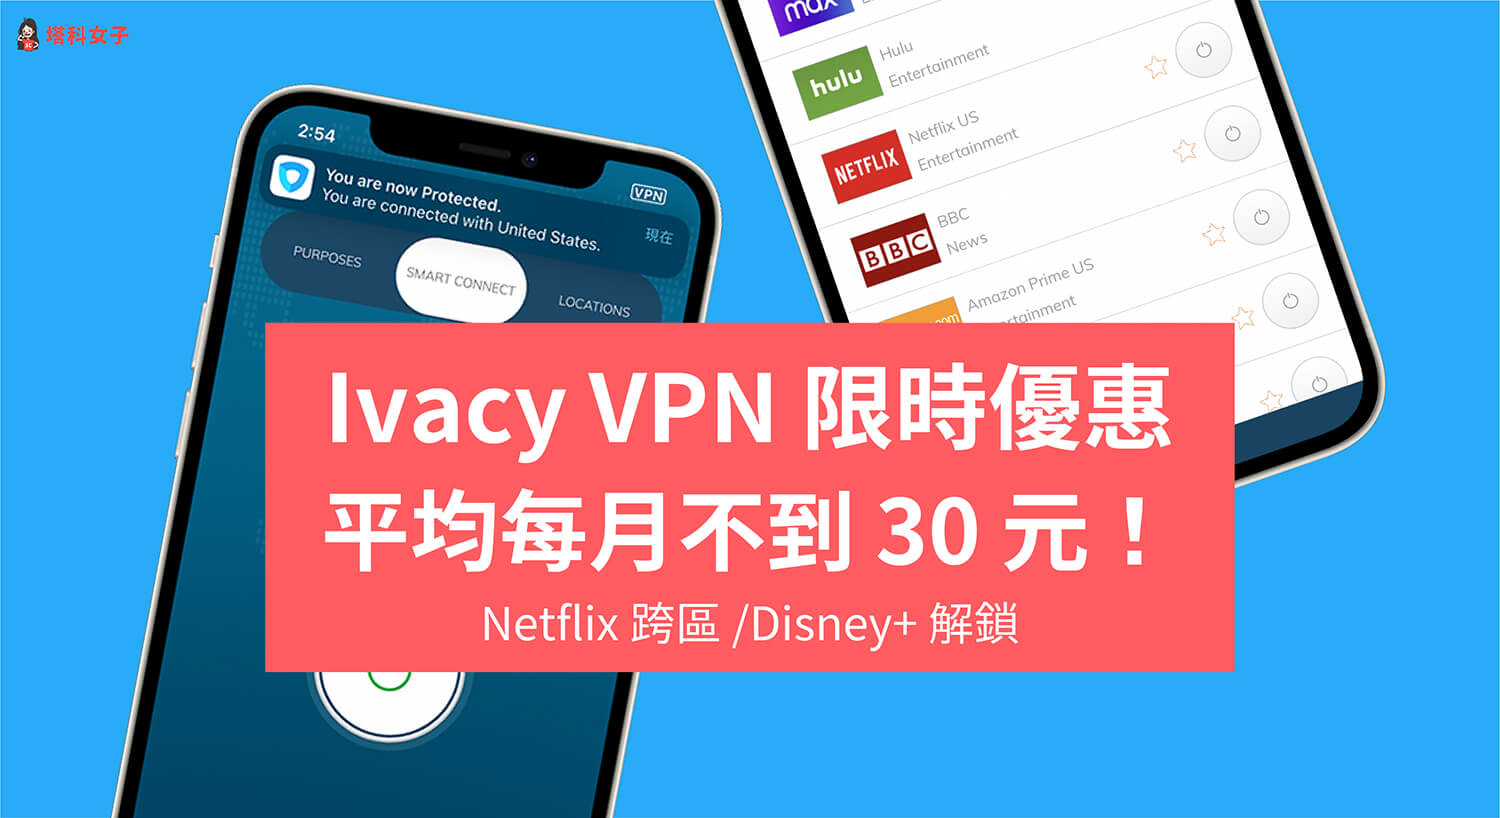 Ivacy VPN 1 折限時優惠：平均每月不到 30 元台幣！解鎖 Netflix 跨區及 Disney+